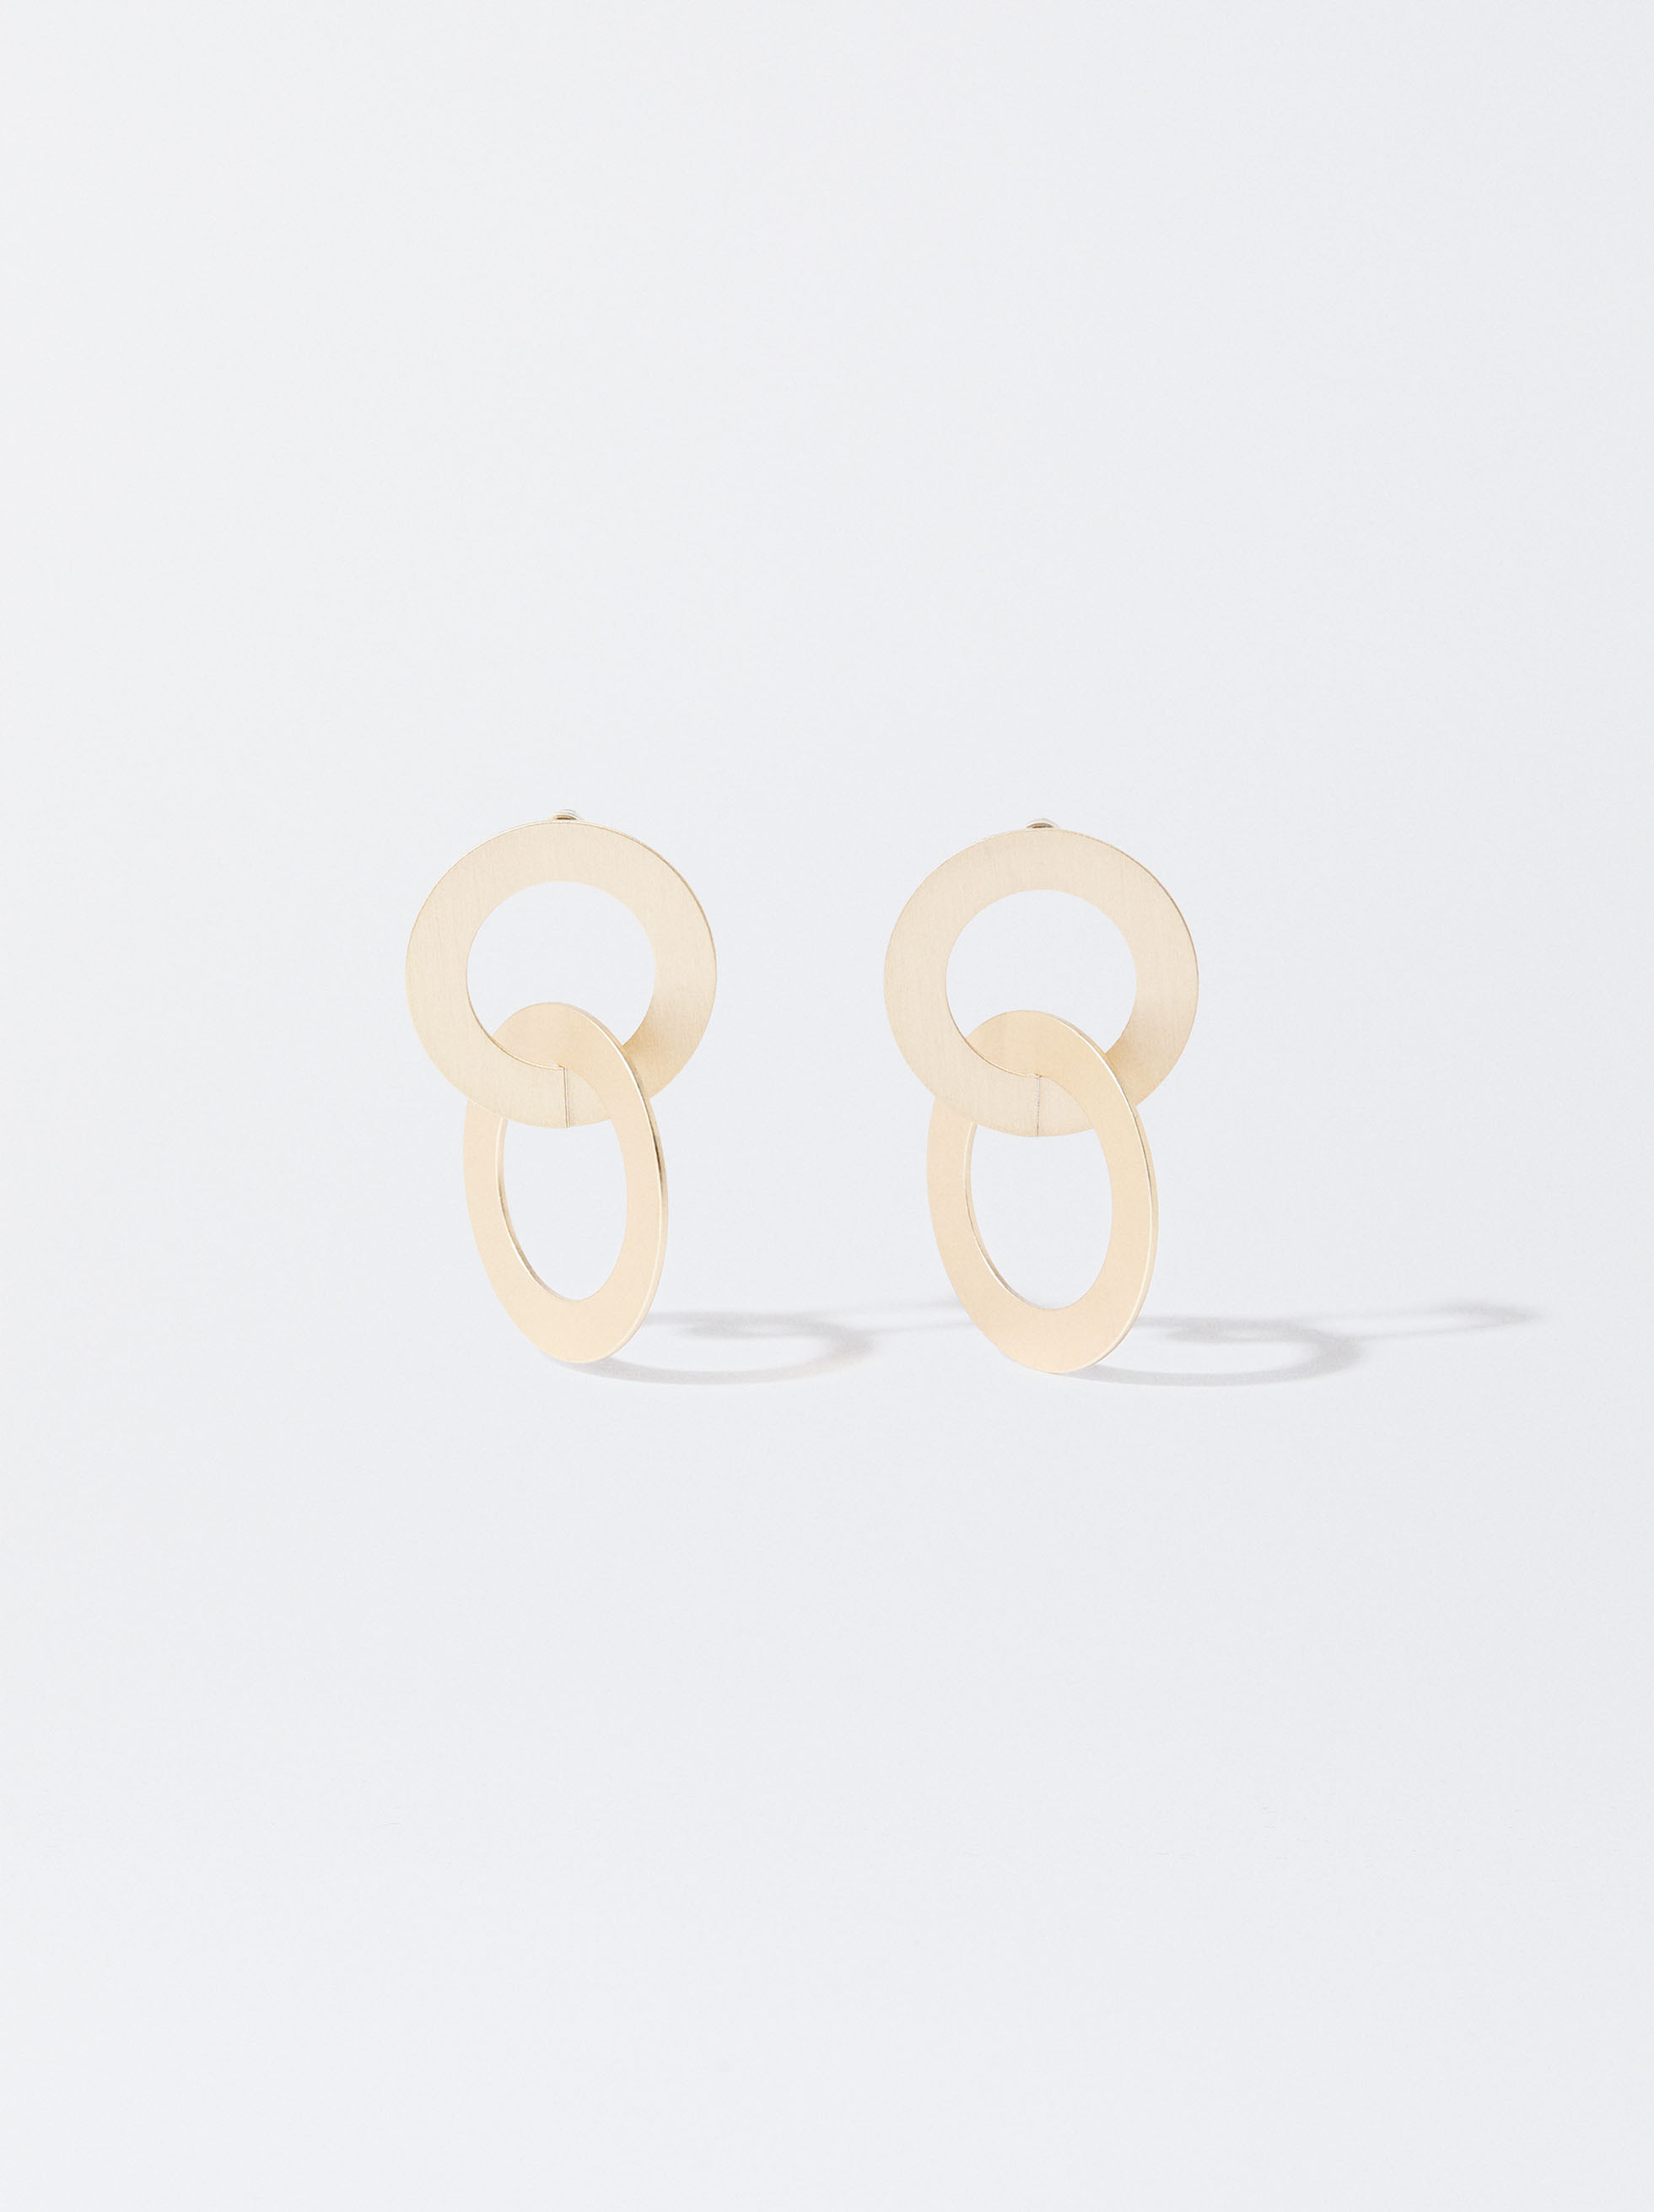 Geometric Golden Earrings image number 0.0